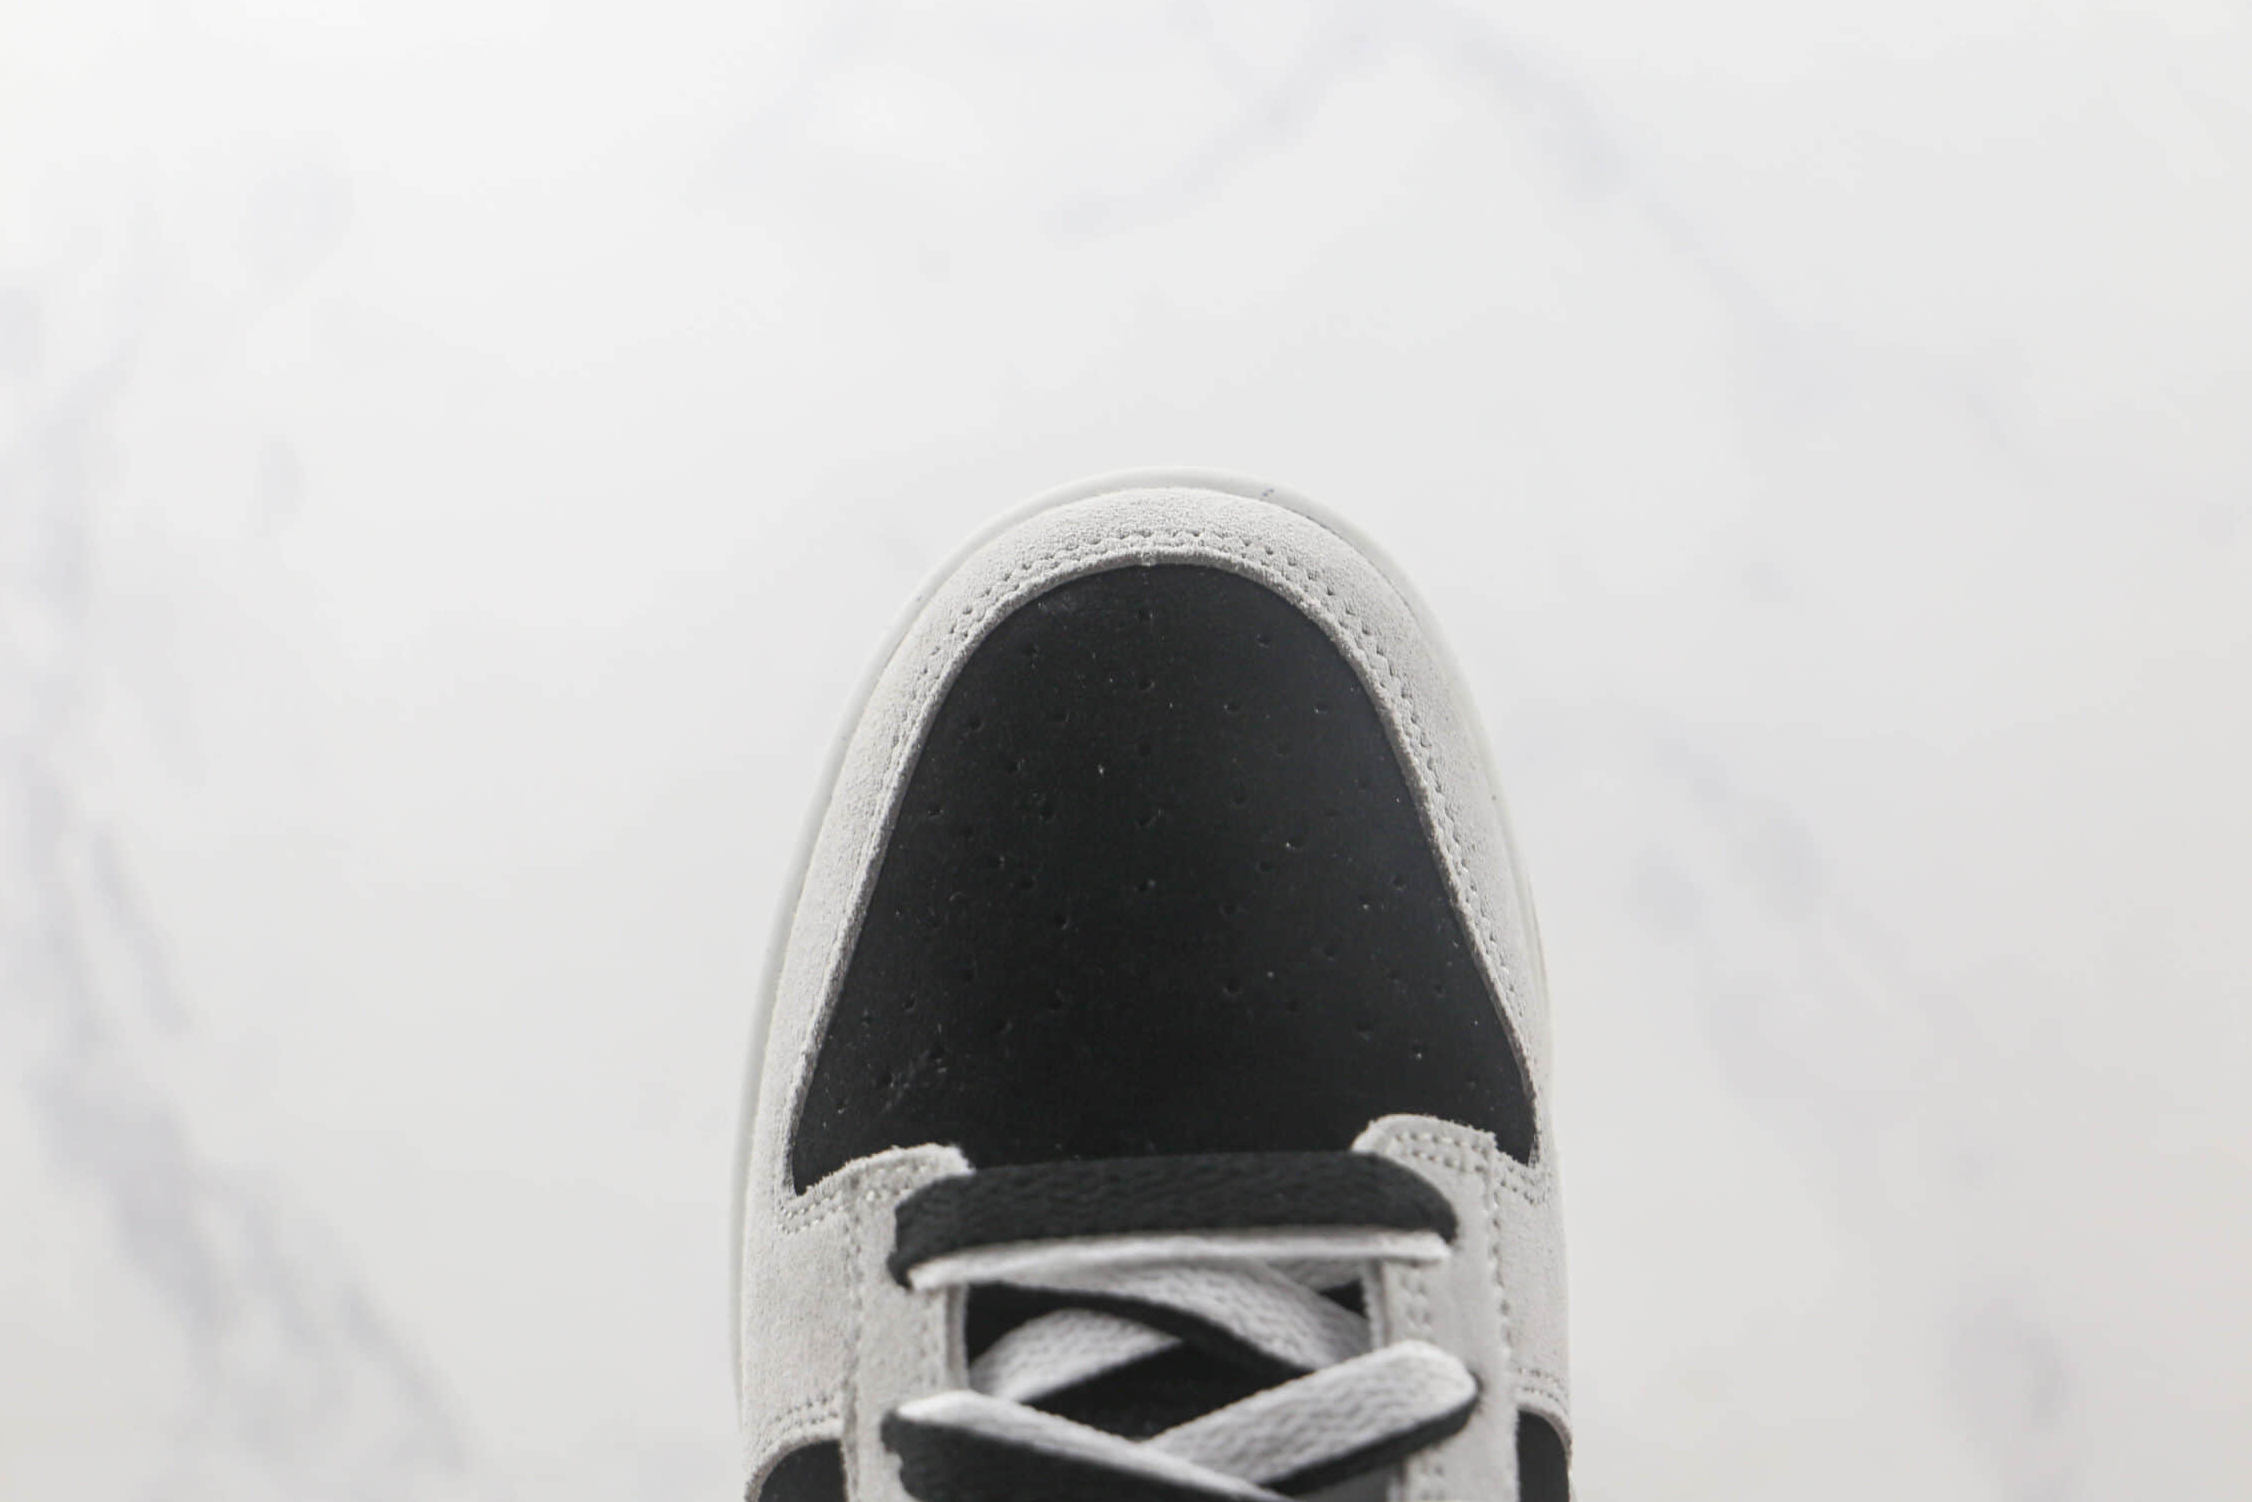 Nike SB Dunk Low 85 Cream White Light Grey Black DD9457-102 - Premium Sneaker in Versatile Shades.